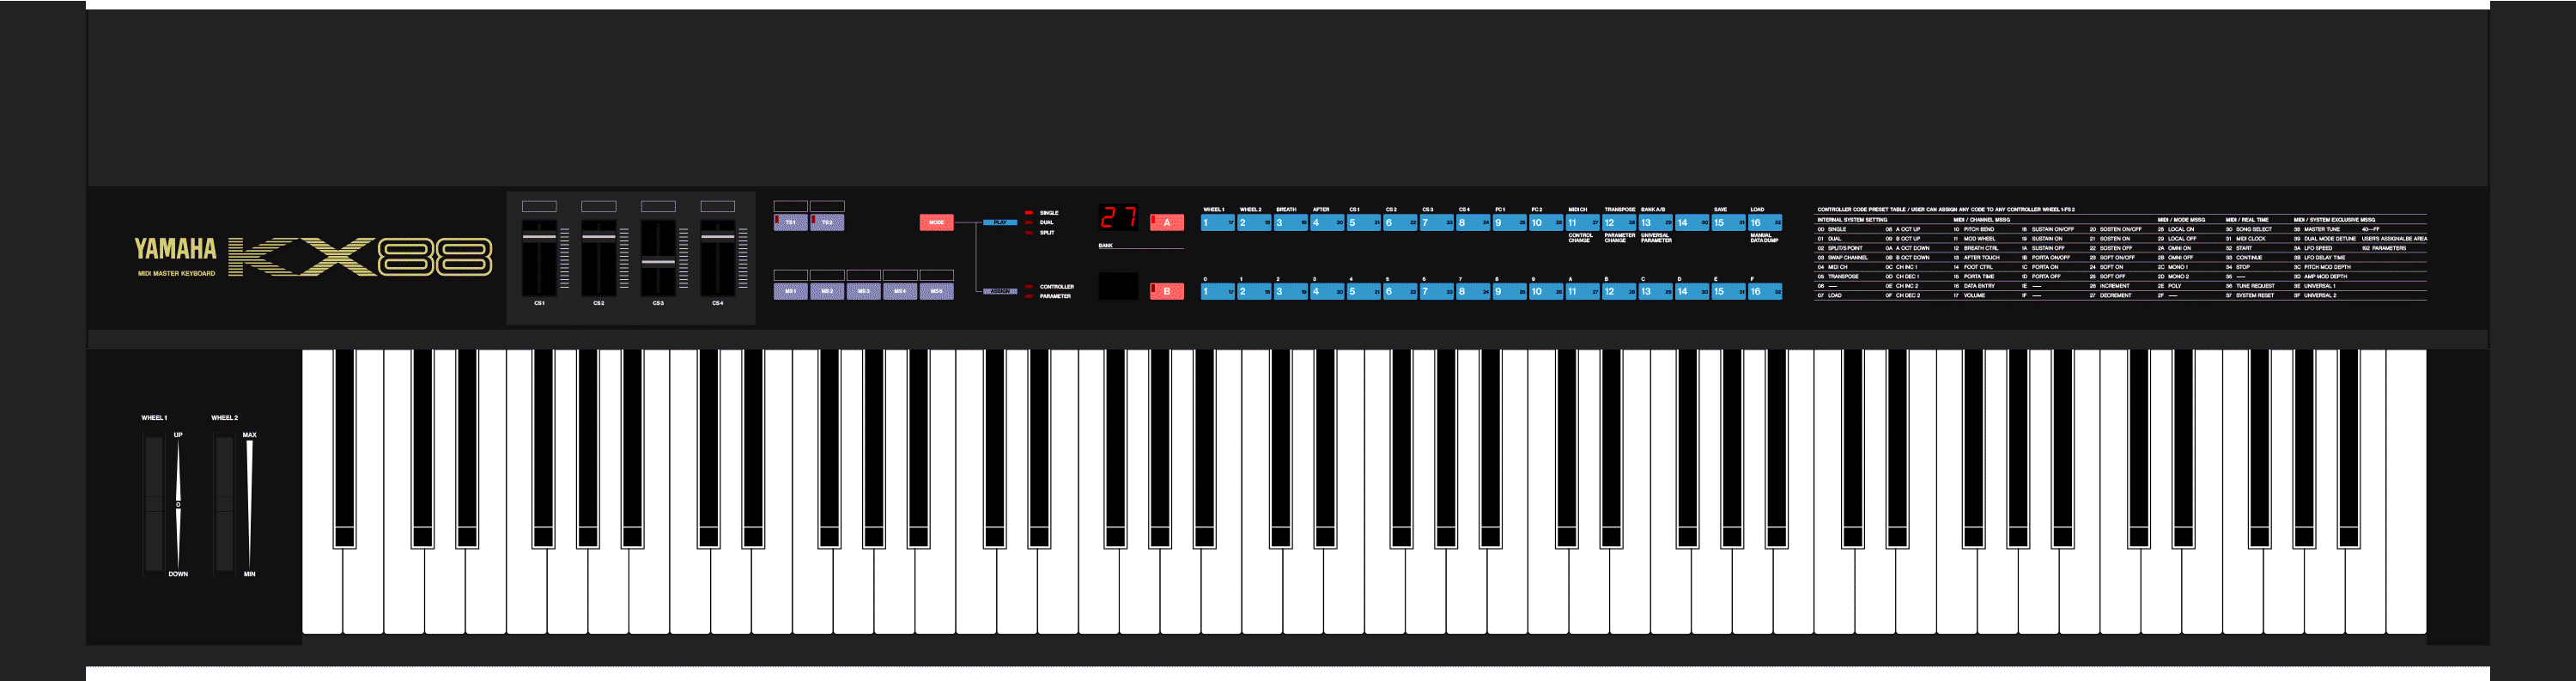 Yamaha KX88 MIDI controller a tastiera